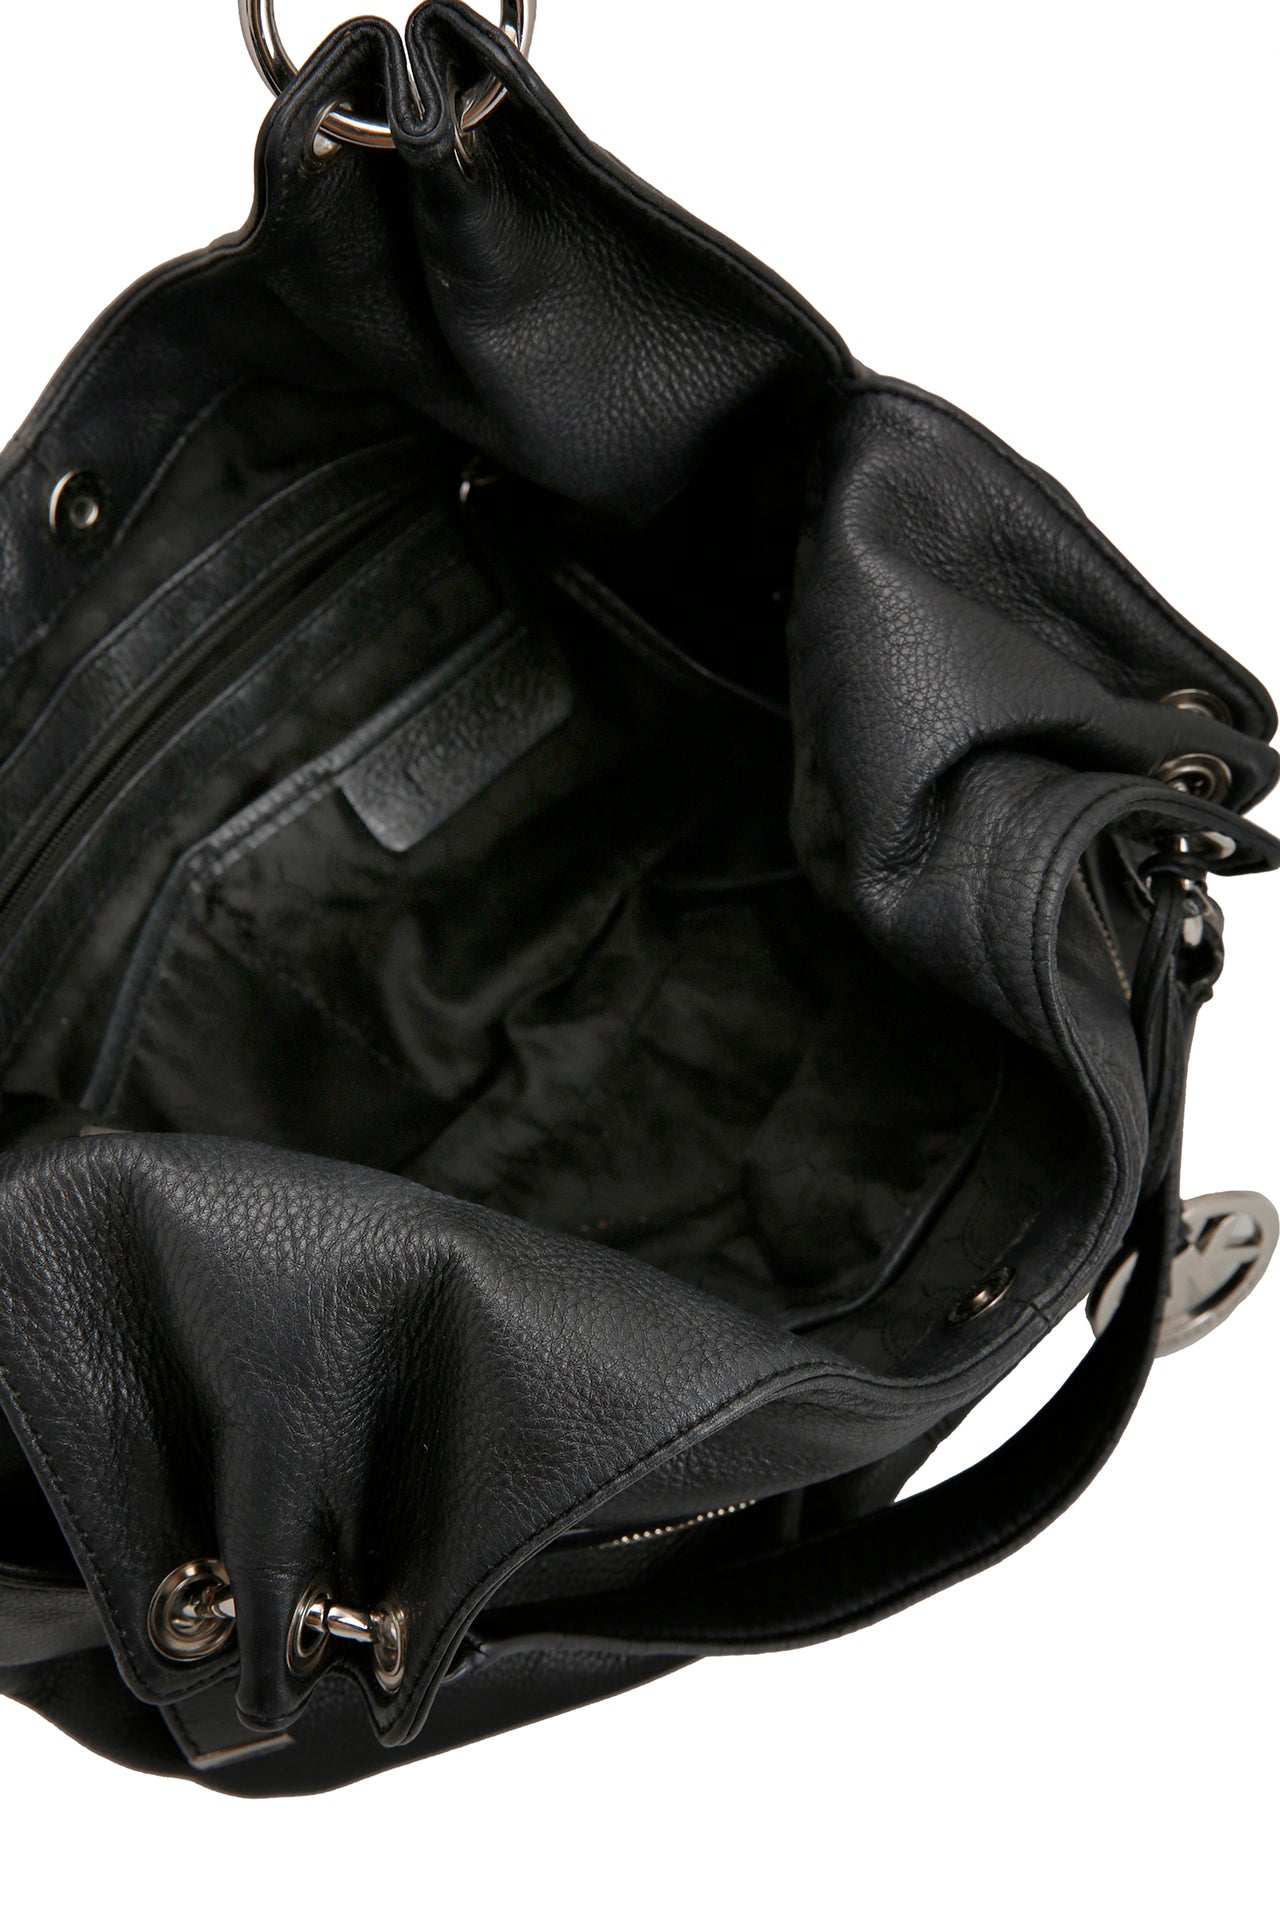 Michael Kors Black Leather Large Layton Hobo